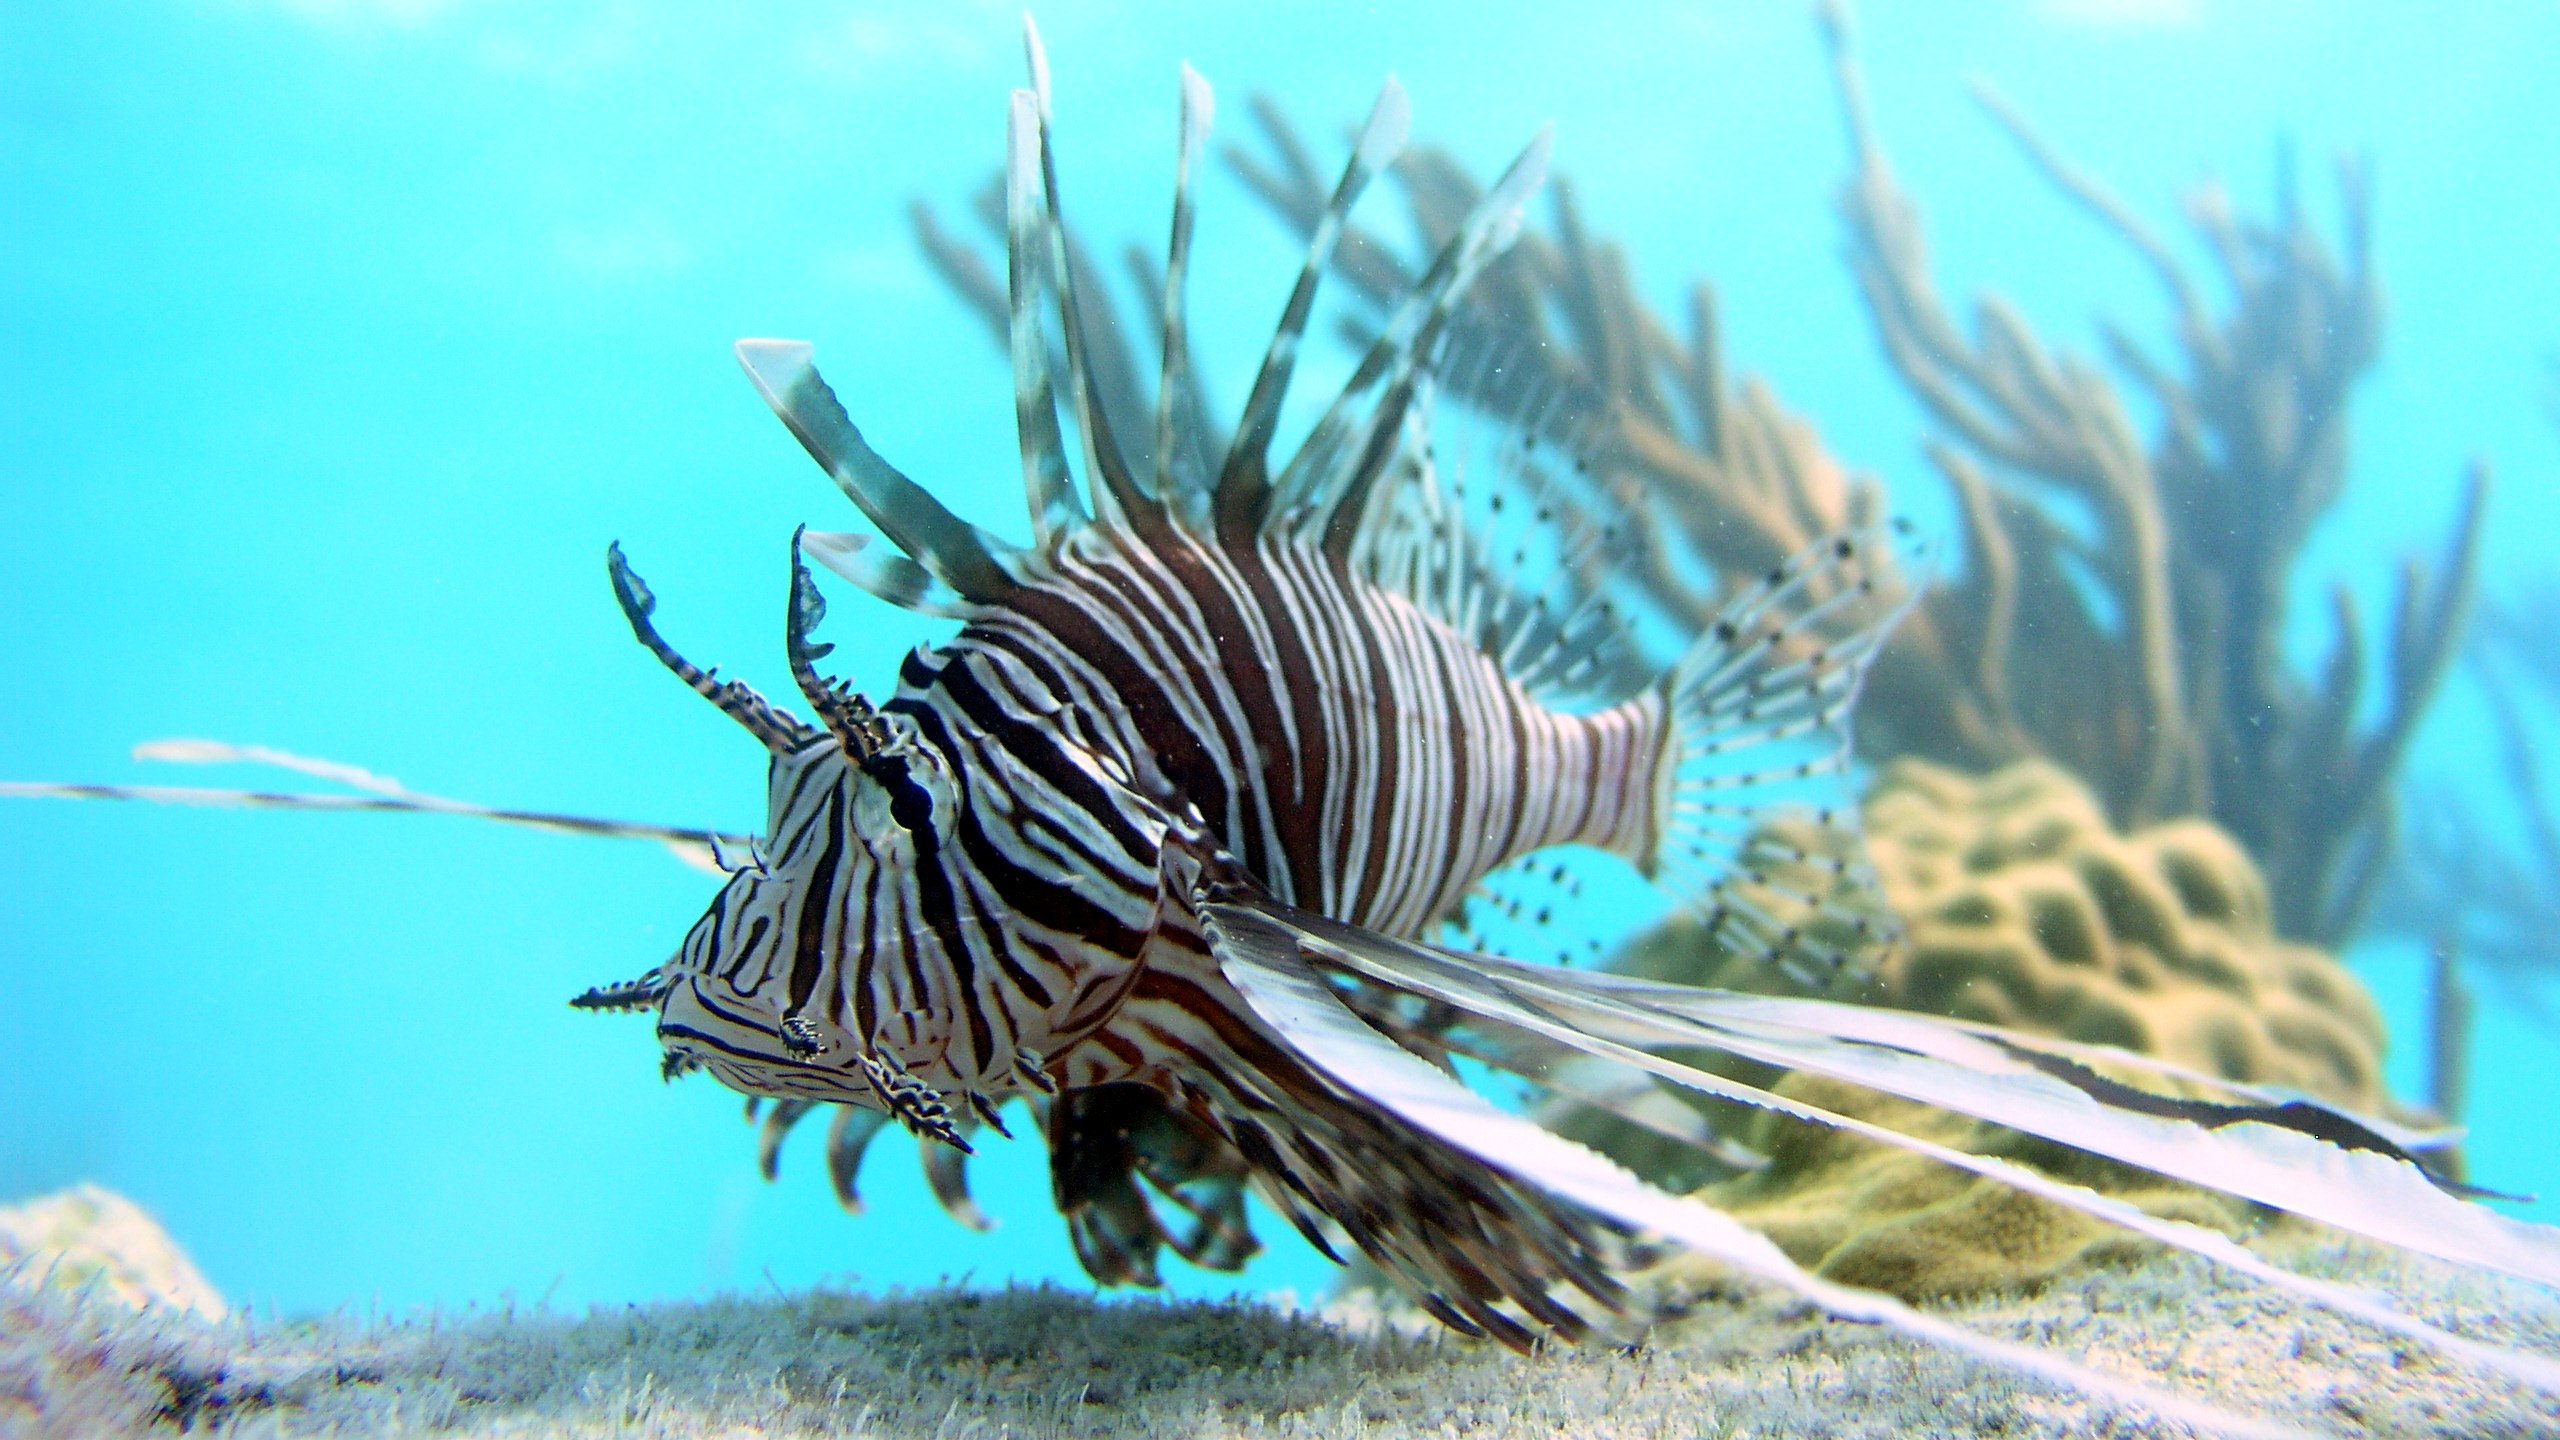 220107-lionfish-in-bahamas-main-16x9-2560px.jpg